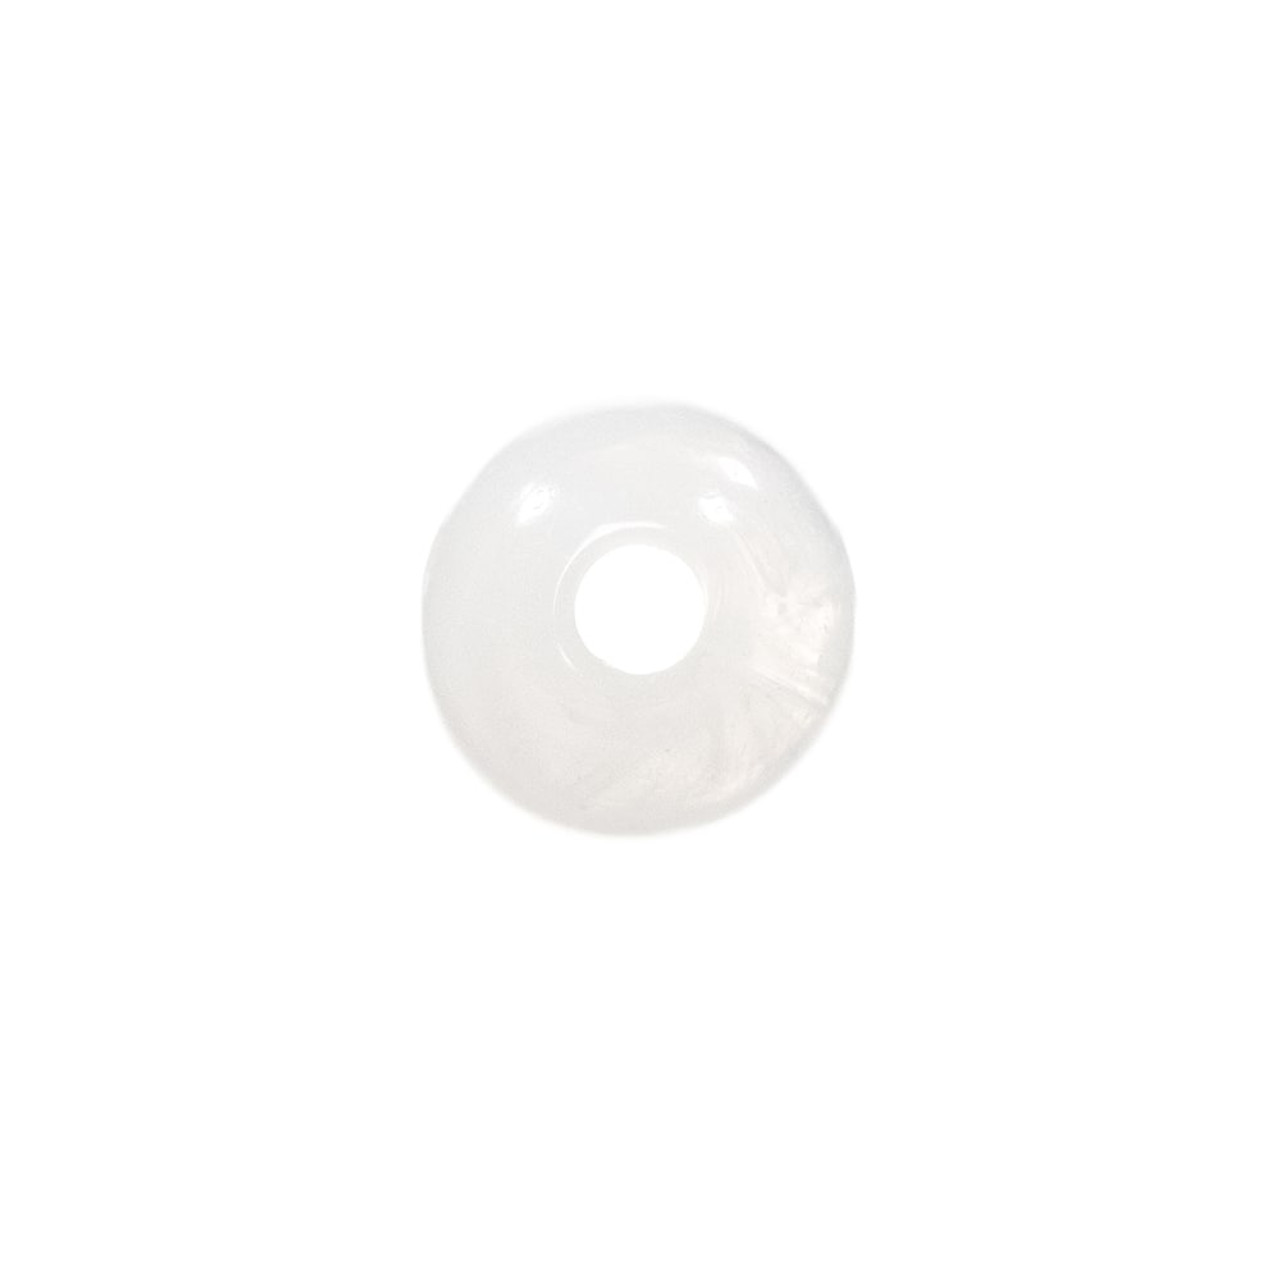 Acrylic Circle Beads, Acrylic Ring Beads